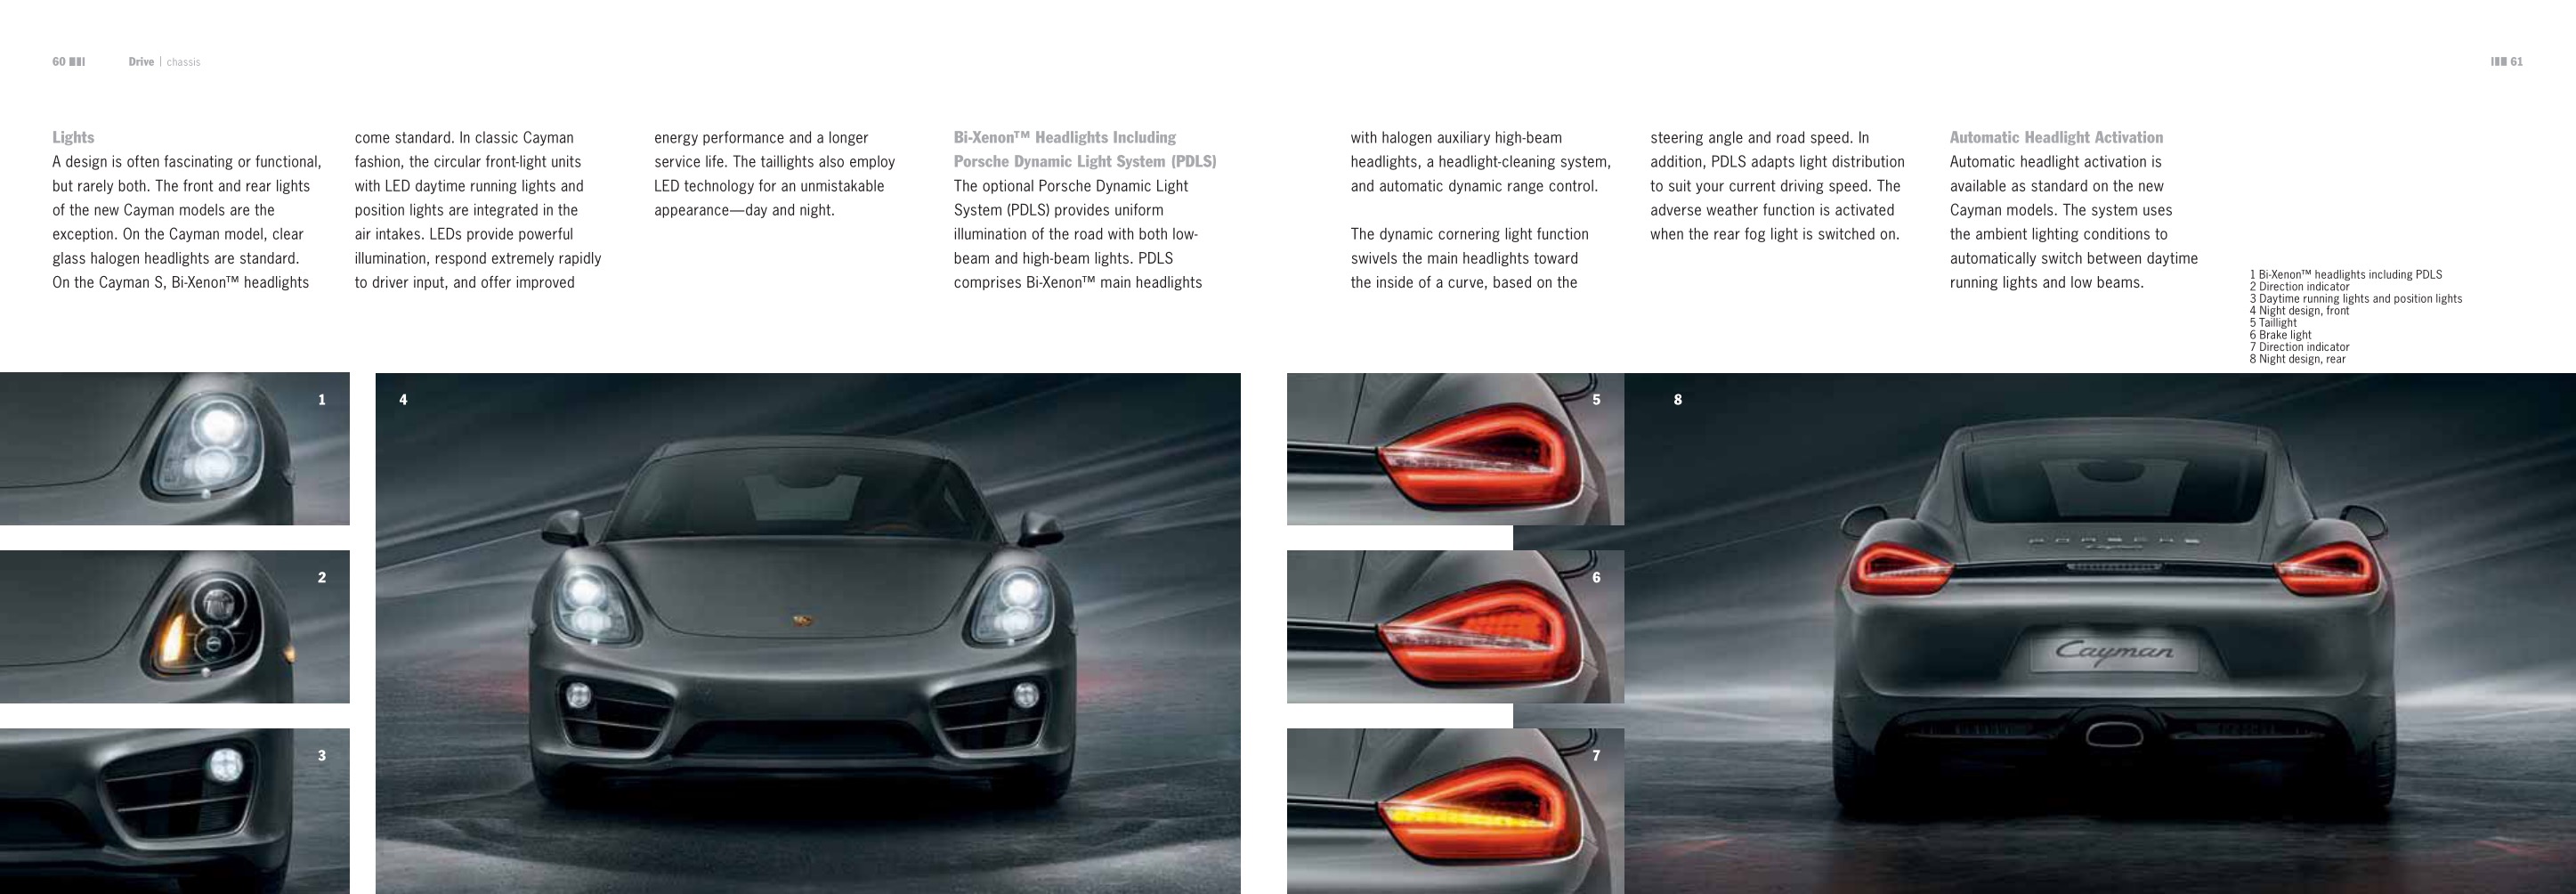 2014 Porsche Cayman Brochure Page 3